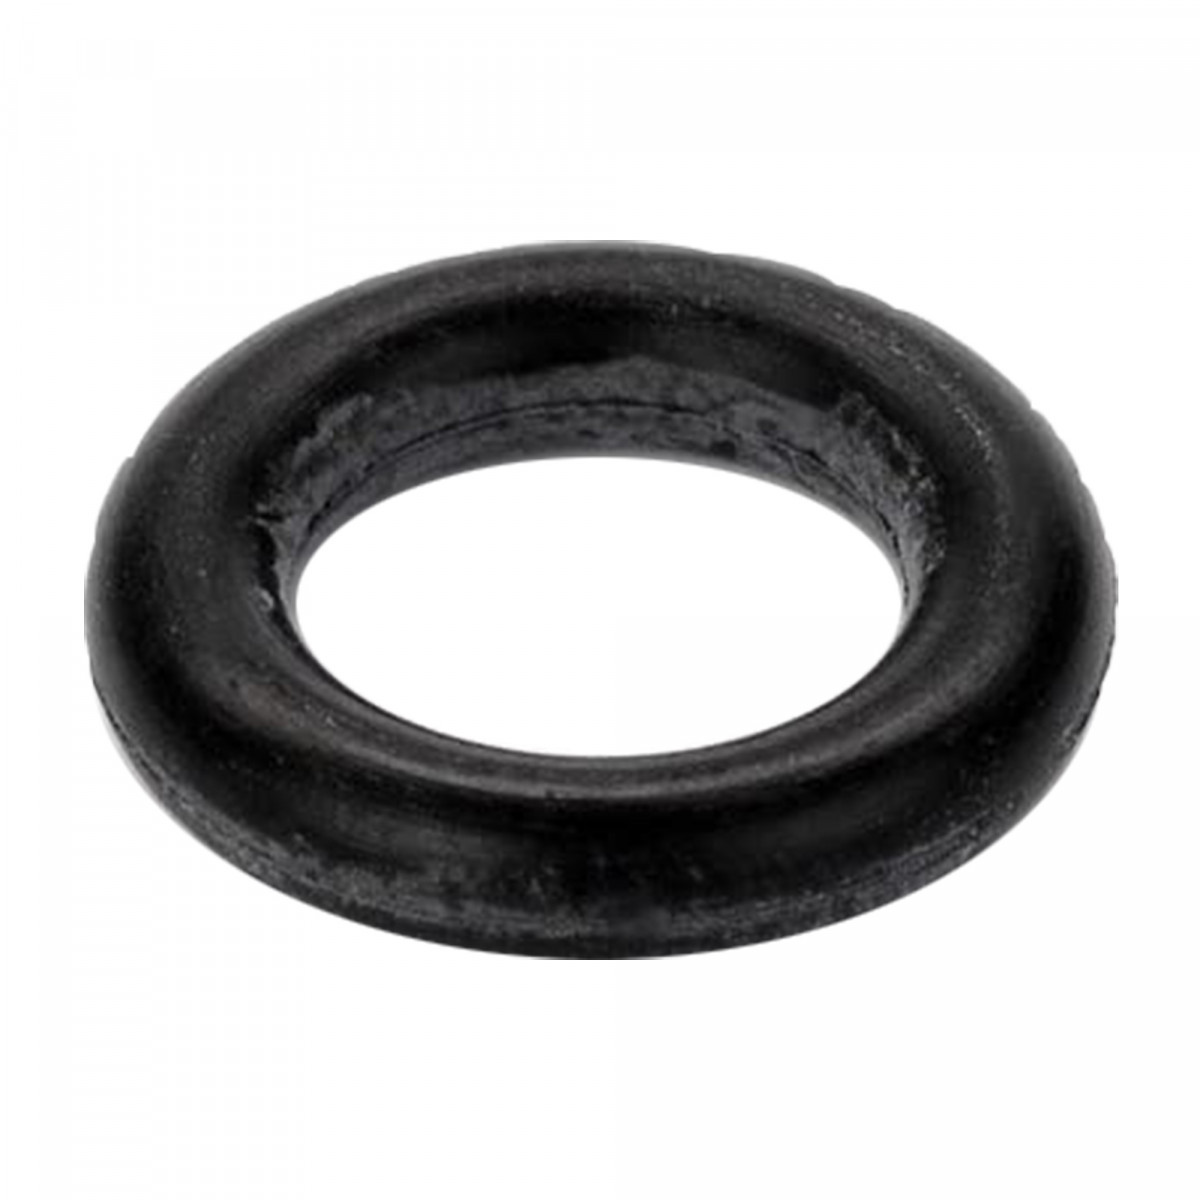 rubber ring voor dip-tube soda keg